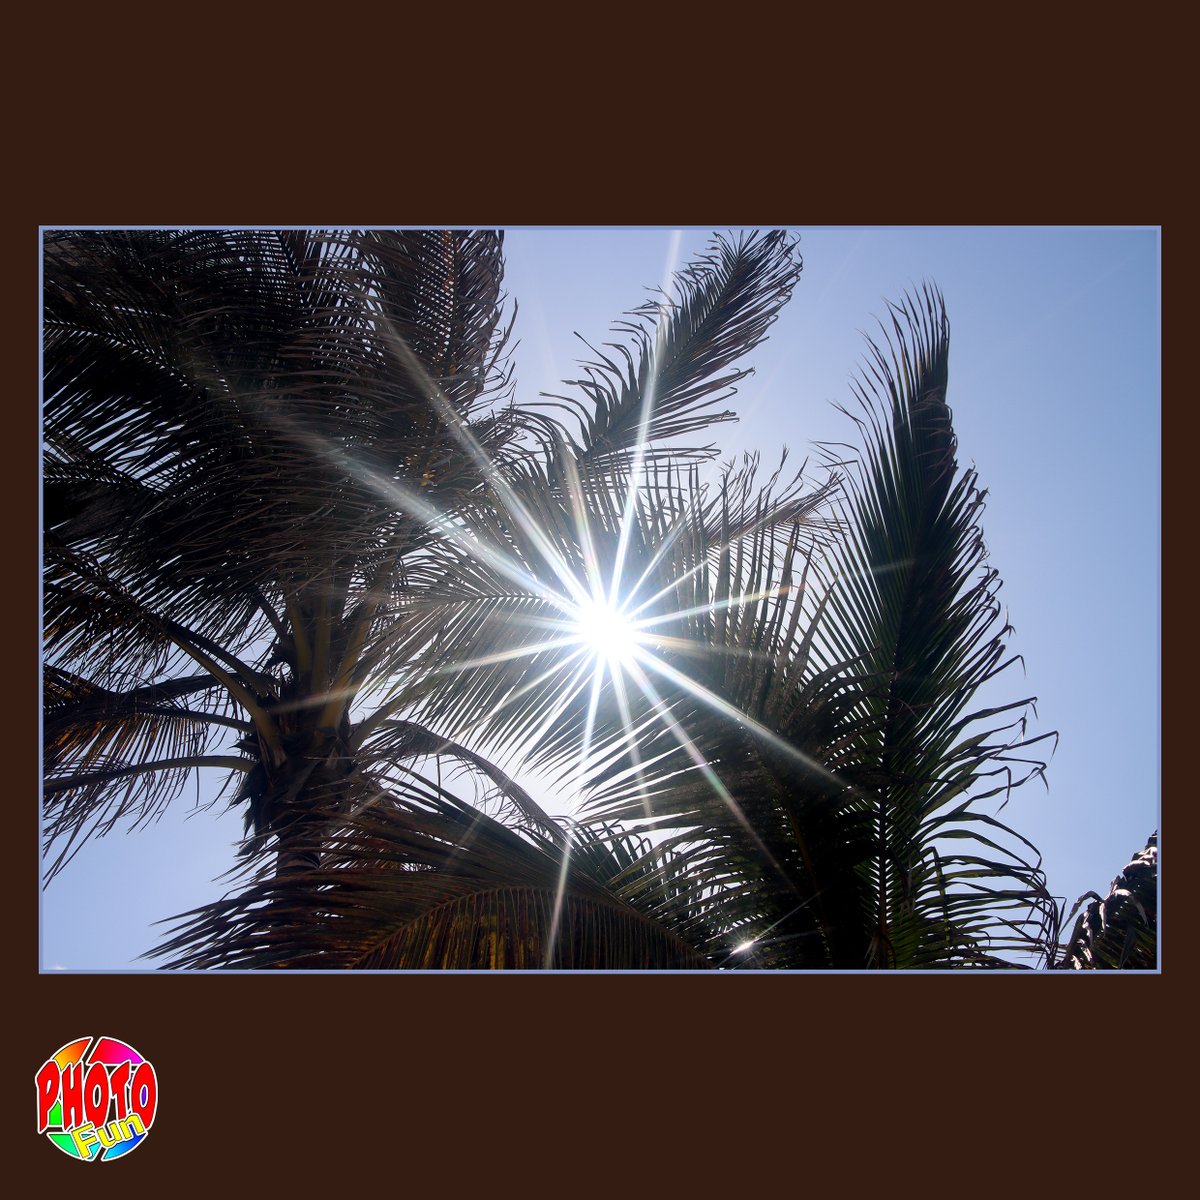 Canon EOS 90D Stars in Palm Trees #cokin #cokinfilters #055 #stars #canon #eos90d #canoneos90d #palm #palmtrees #sun #filterphotography #digitalphotography #photography #photofun #grancanaria